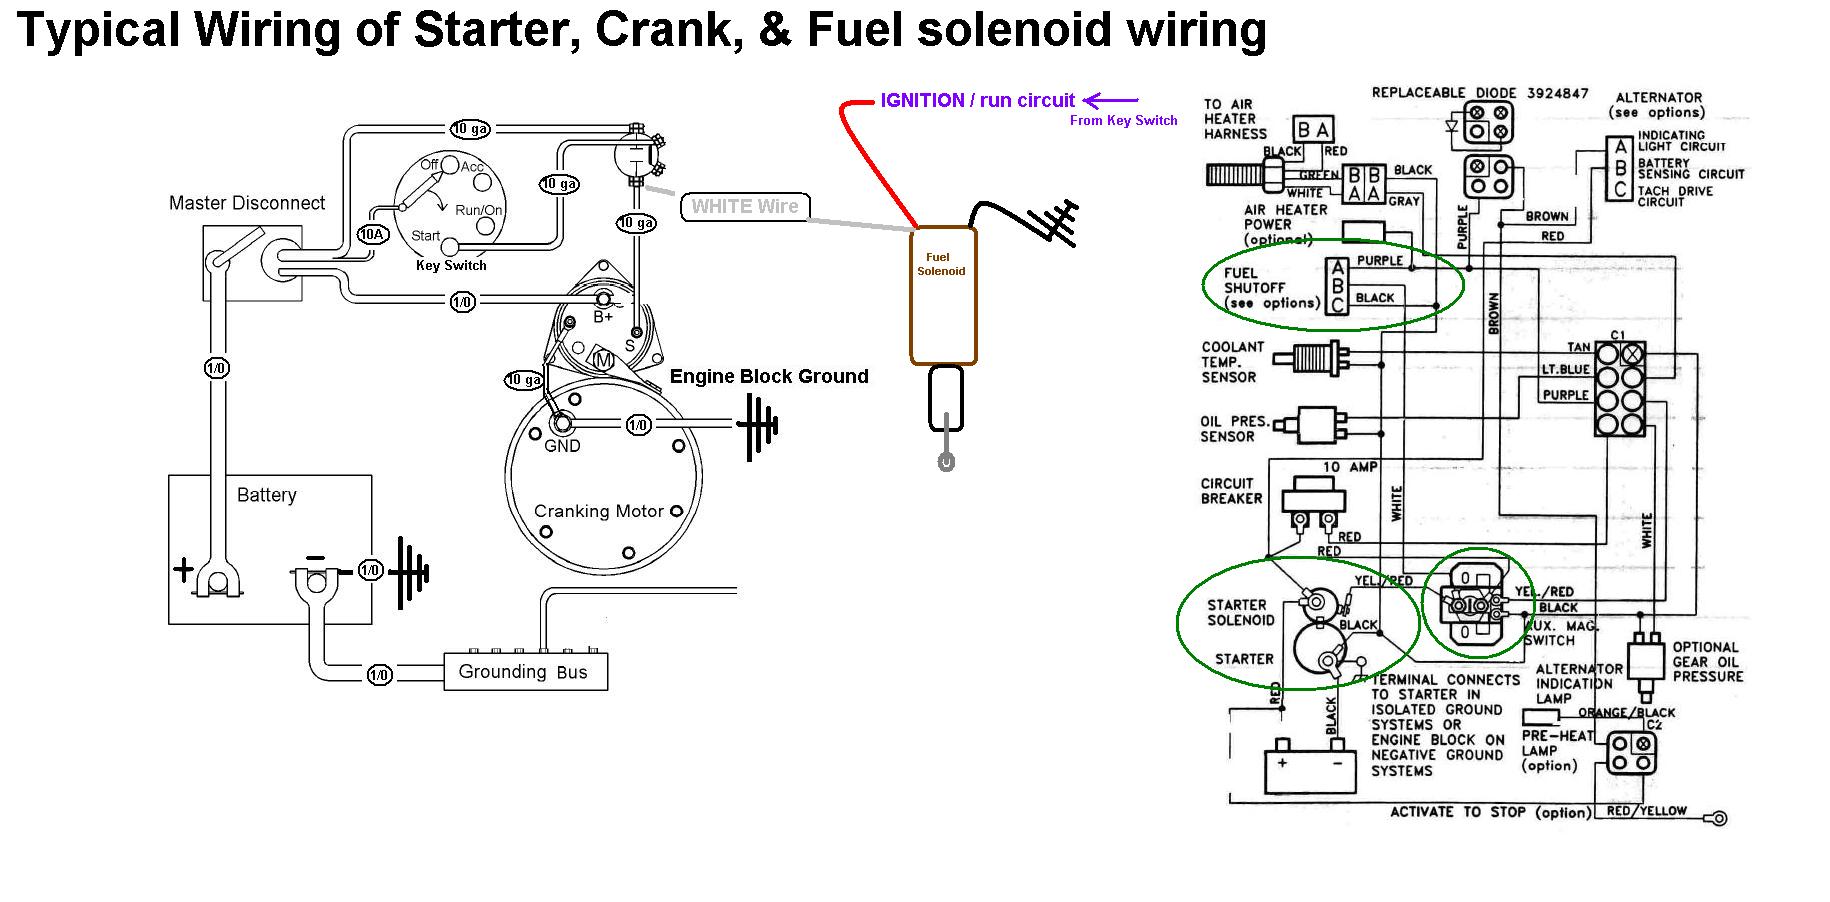 Diagram Pollak Fuel Valve Wiring Diagram Full Version Hd Quality Wiring Diagram Armordiagram6 Sitiecommerceitalia It